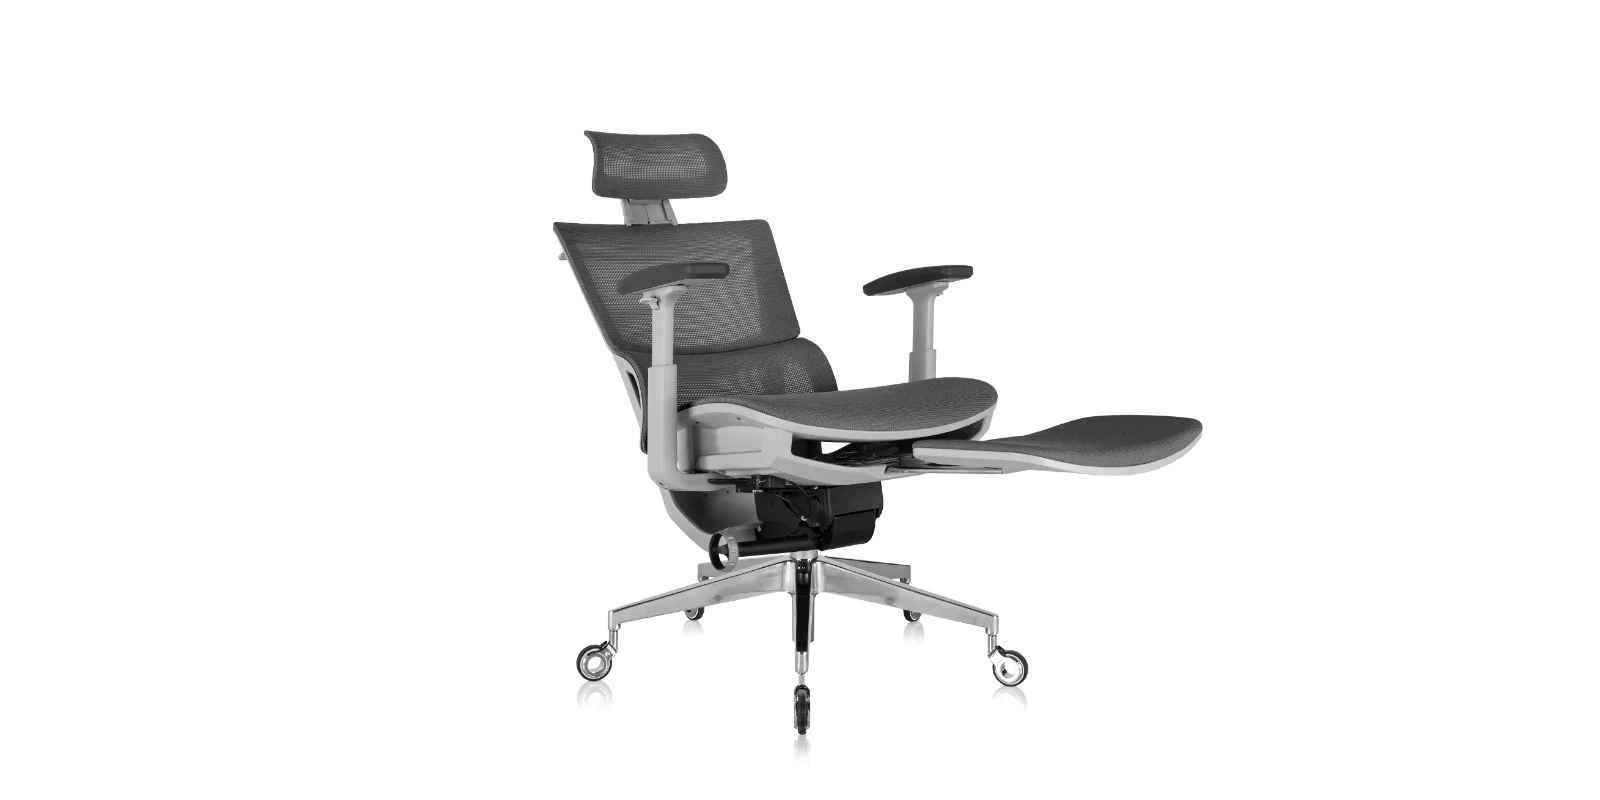 Are cheap ergonomic chairs worth it?